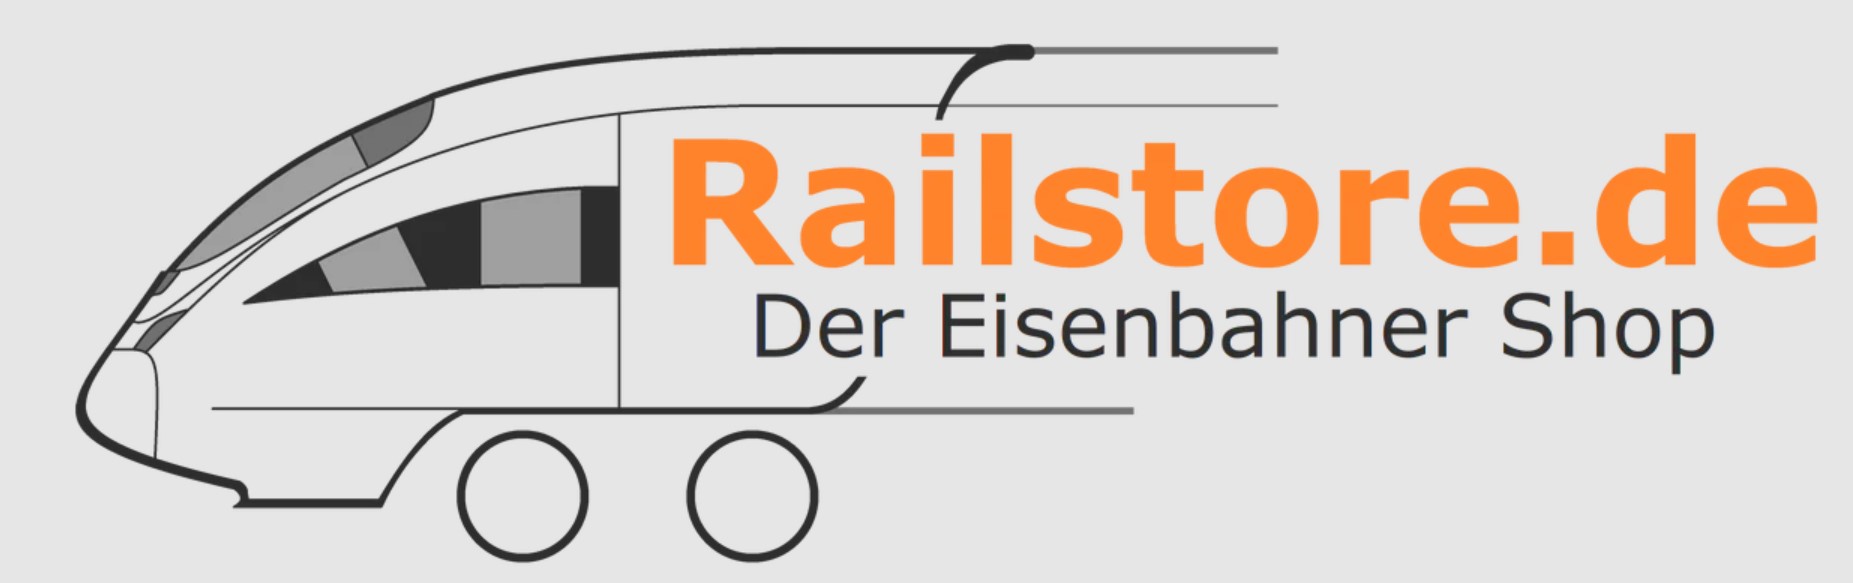 Railstore Onlineshop – Hohenaspe 25582